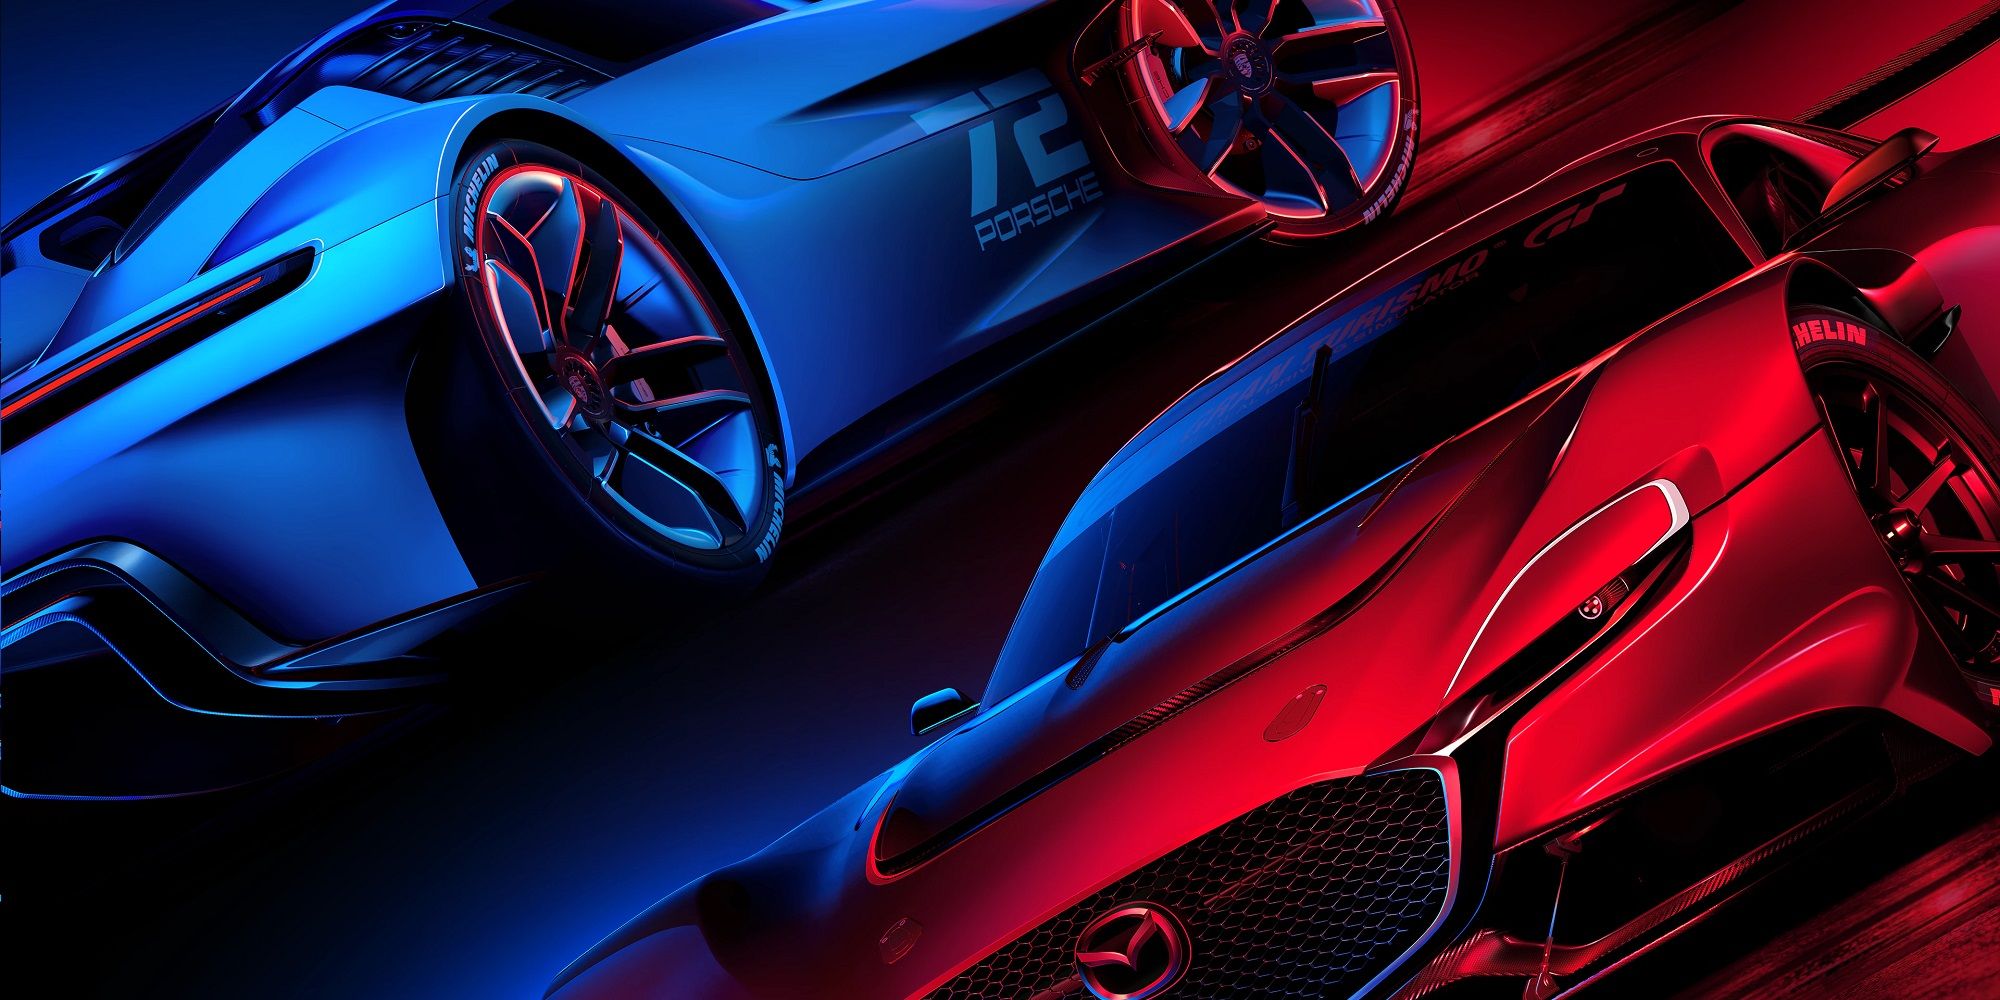 Gran Turismo 7 official poster showing a Mazda supercar